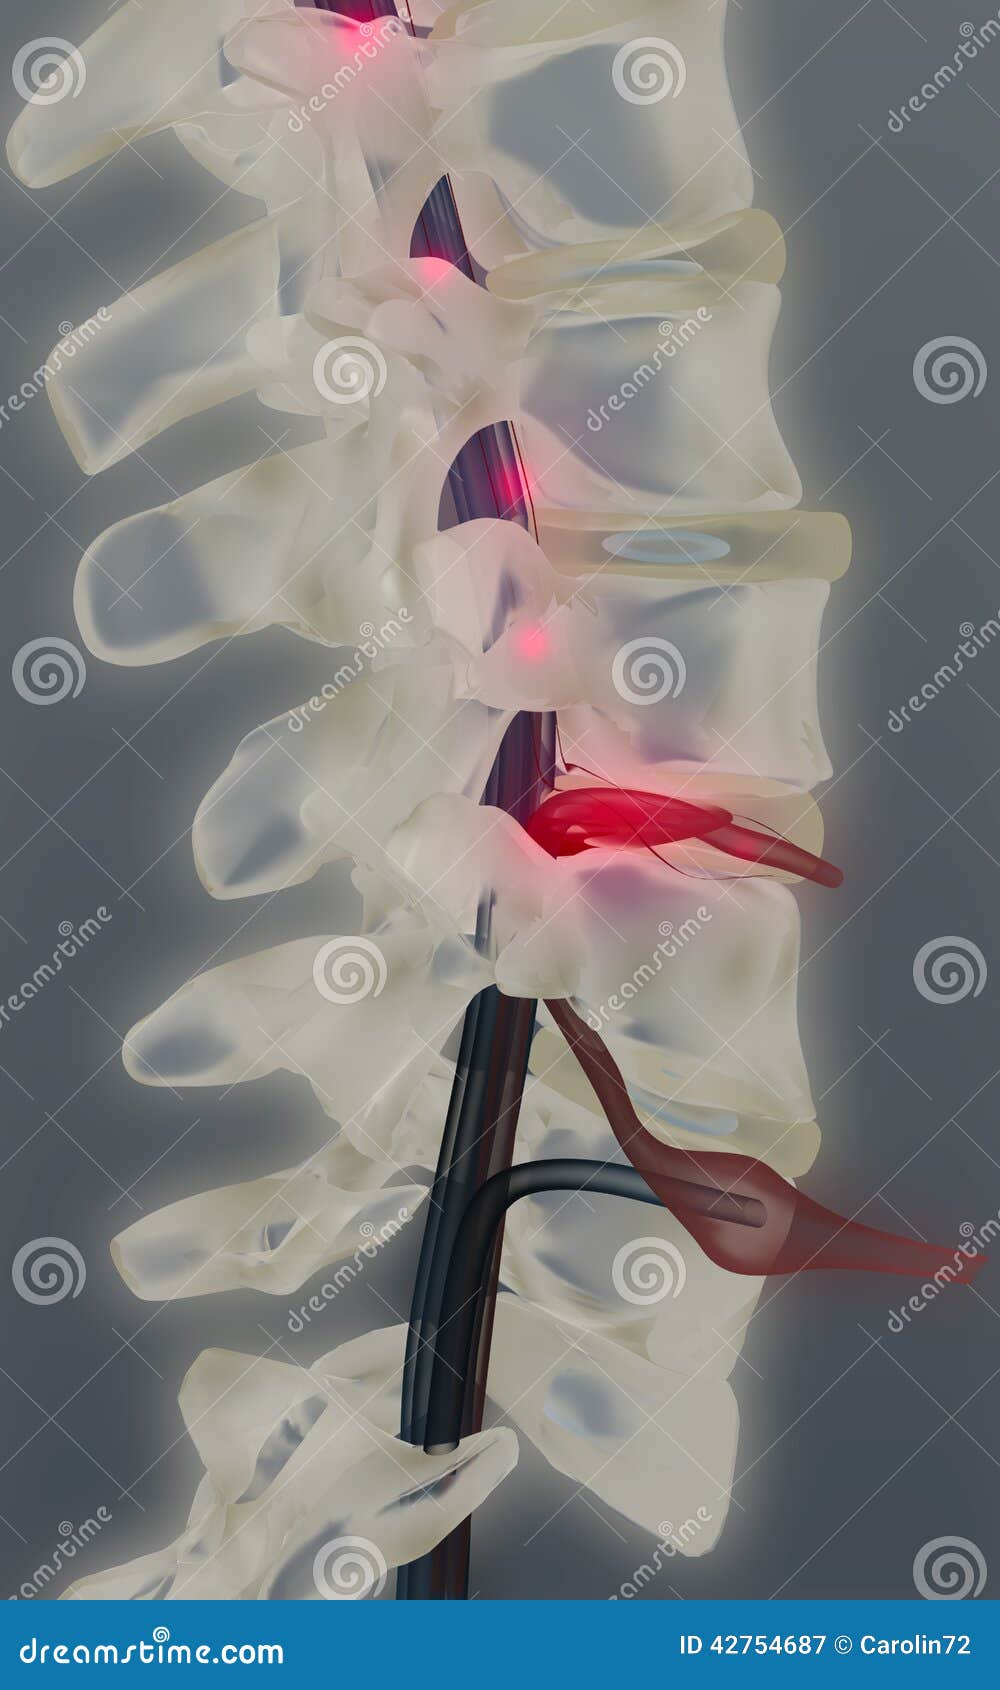 herniated vertebral disk